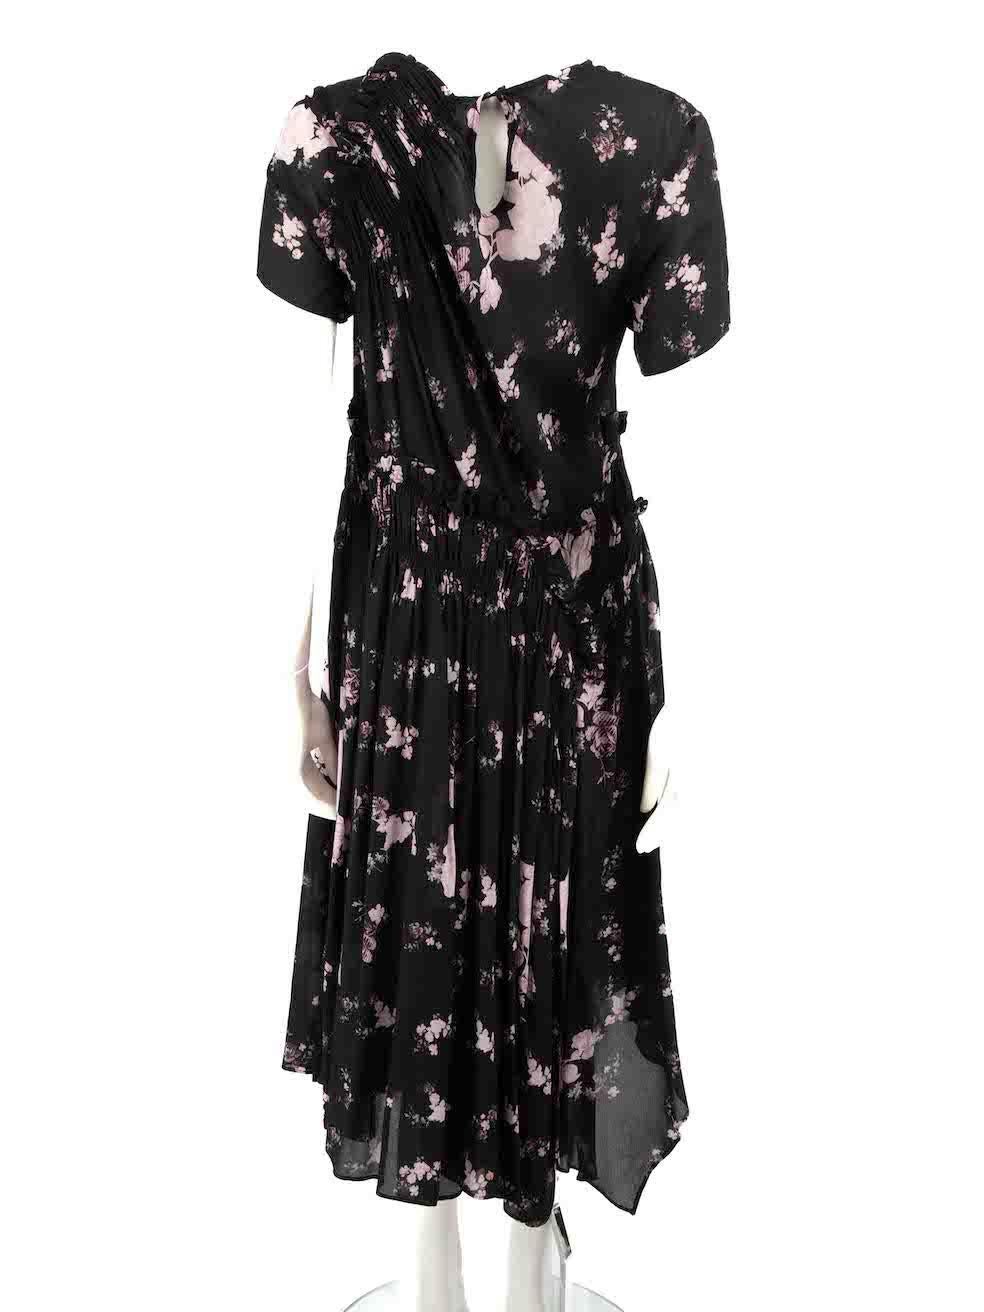 Preen By Thornton Bregazzi Black Floral Midi Dress Size M In Excellent Condition For Sale In London, GB